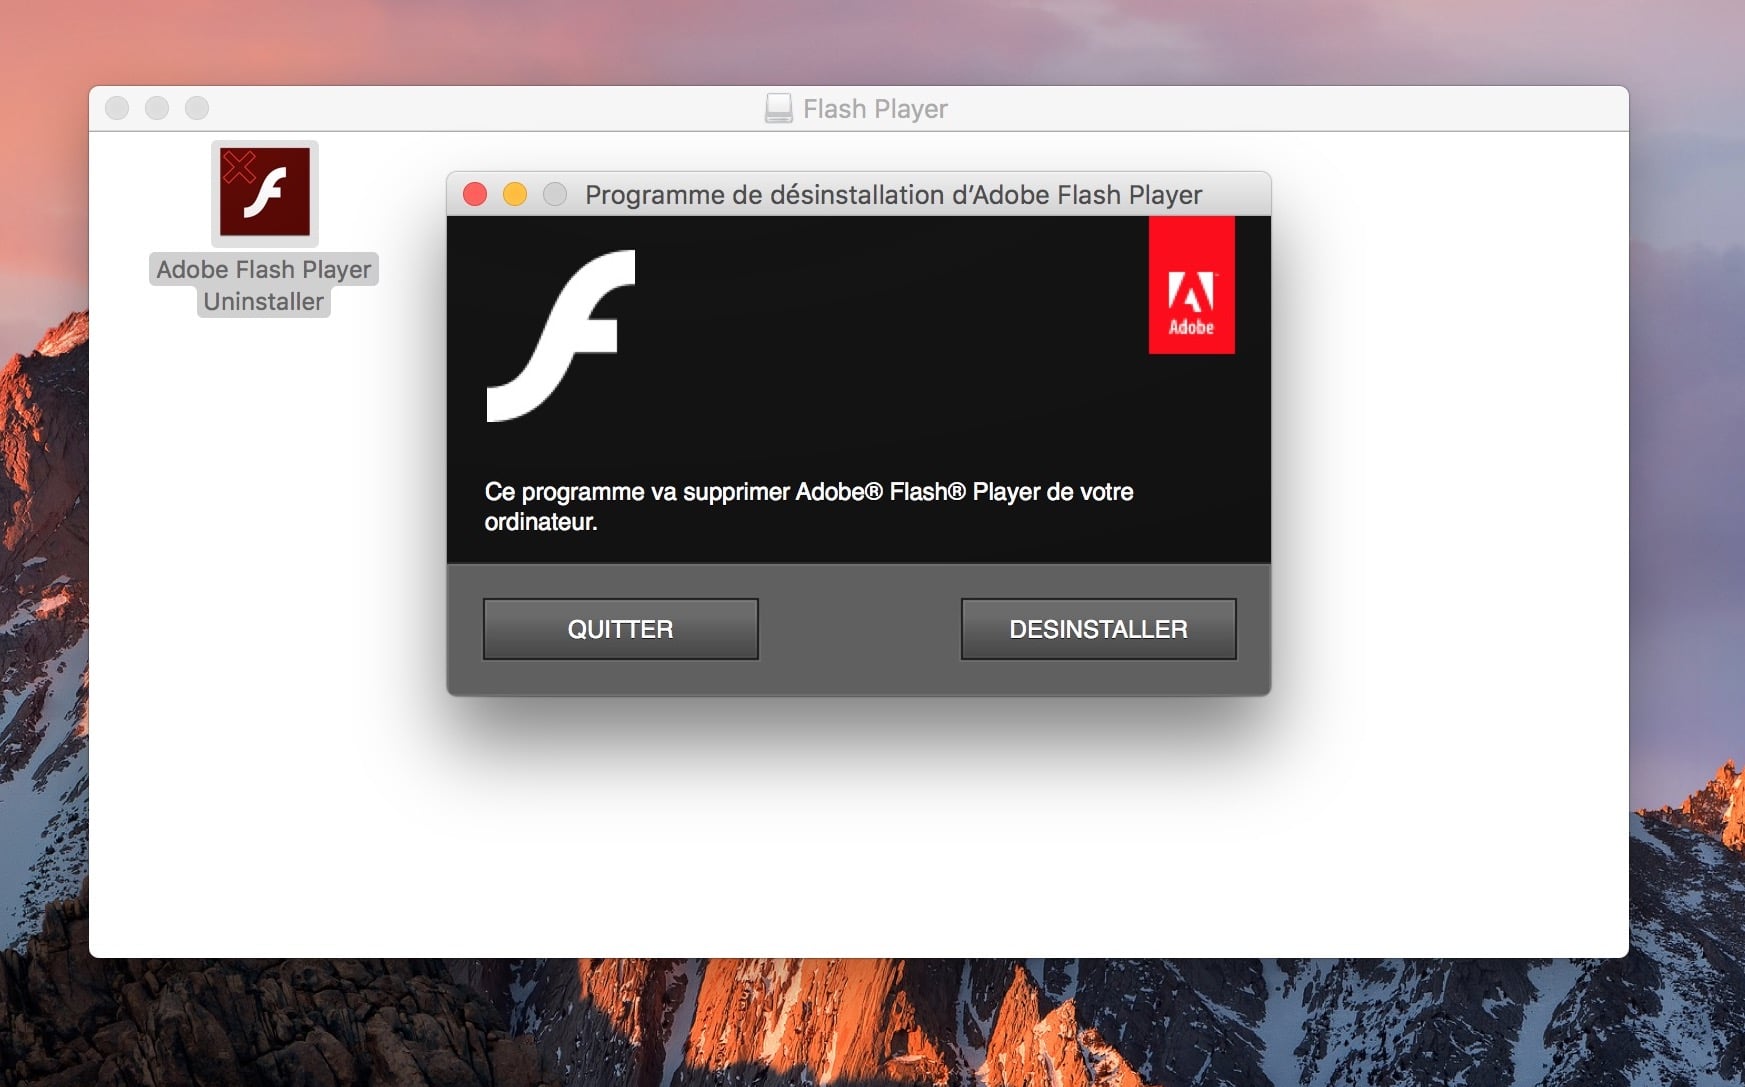 Adobe Flash Player For Mac Os X Yosemite 10.10.5